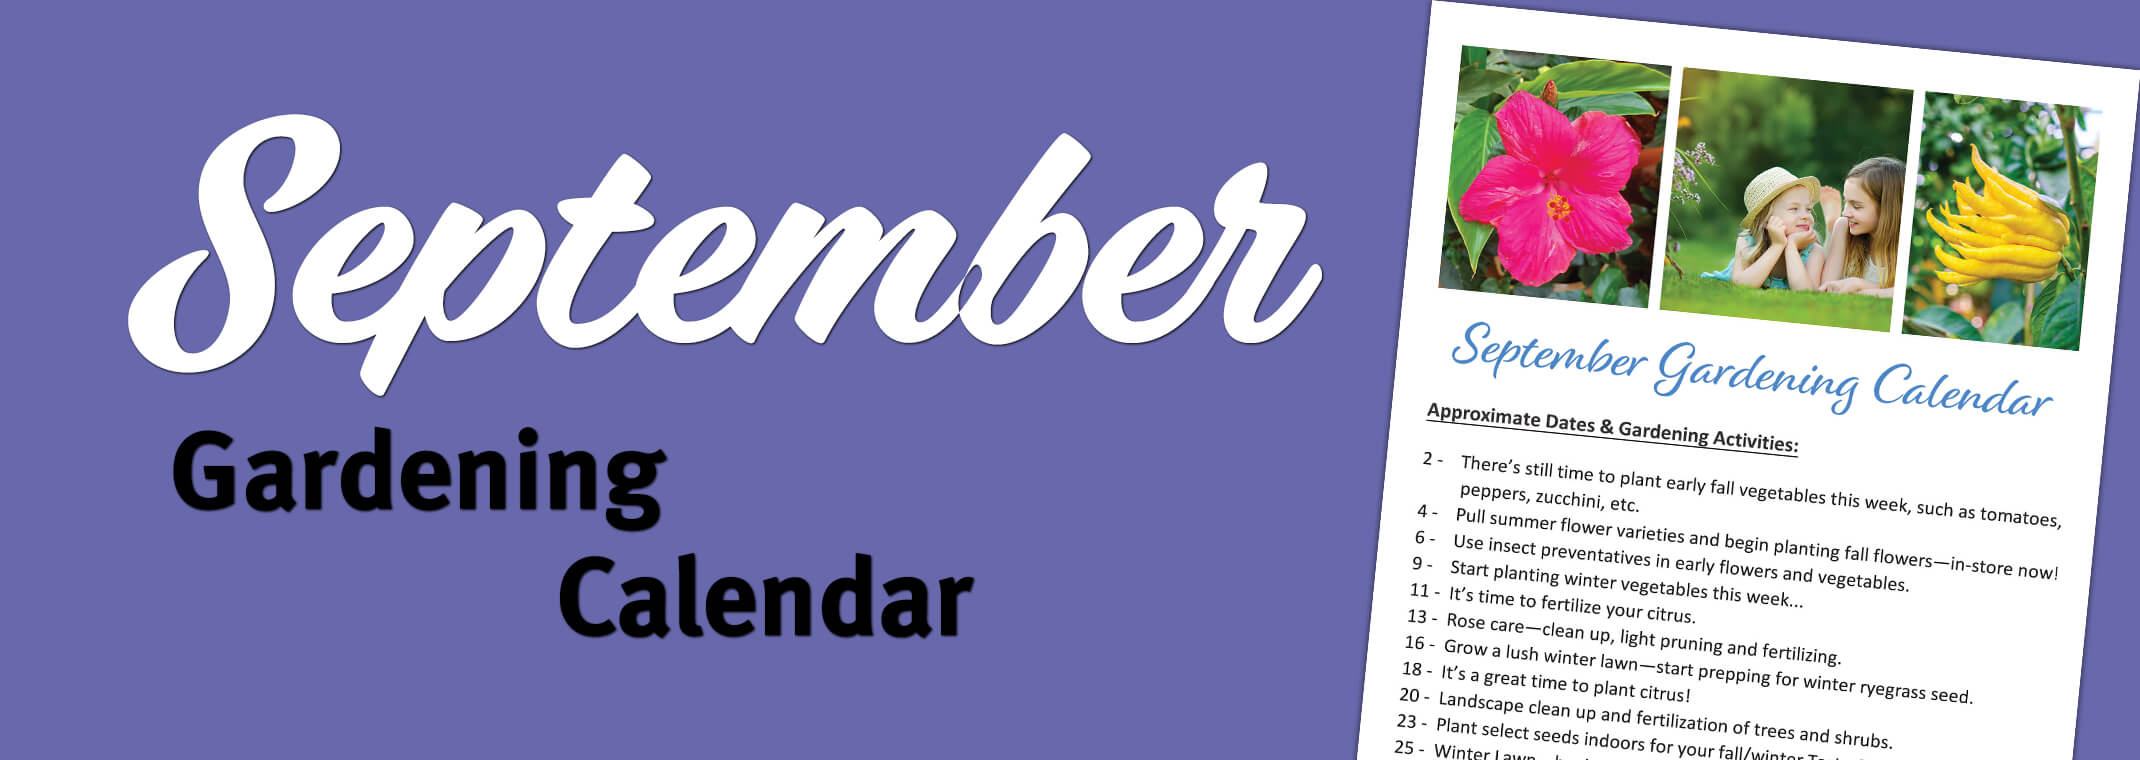 September Gardening Calendar text on purple background with snapshot of downloadable calendar.